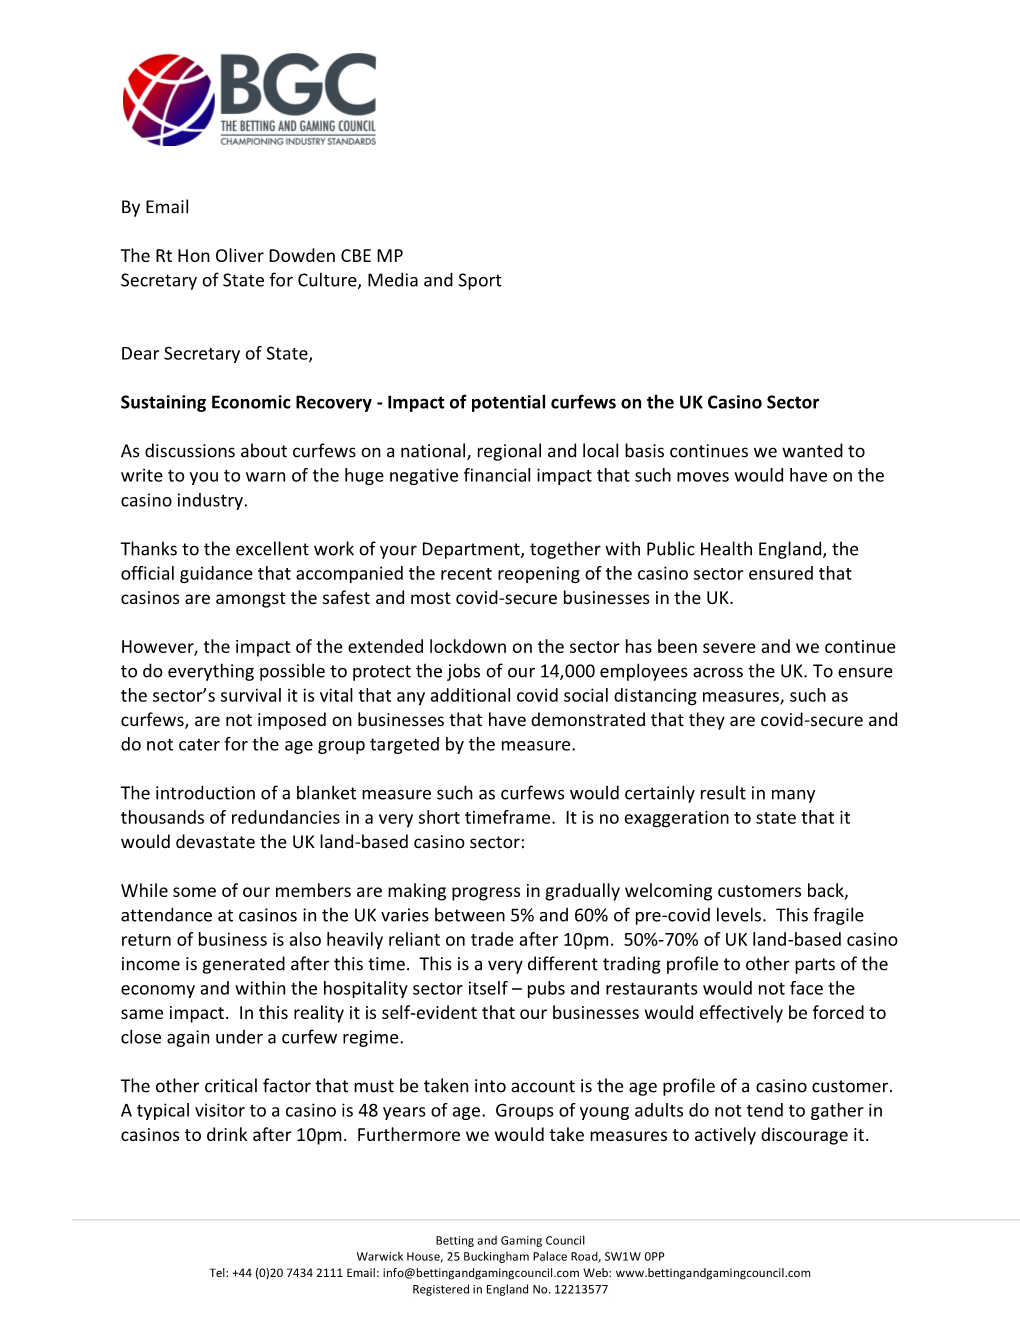 BGC Letter to Oliver Dowden